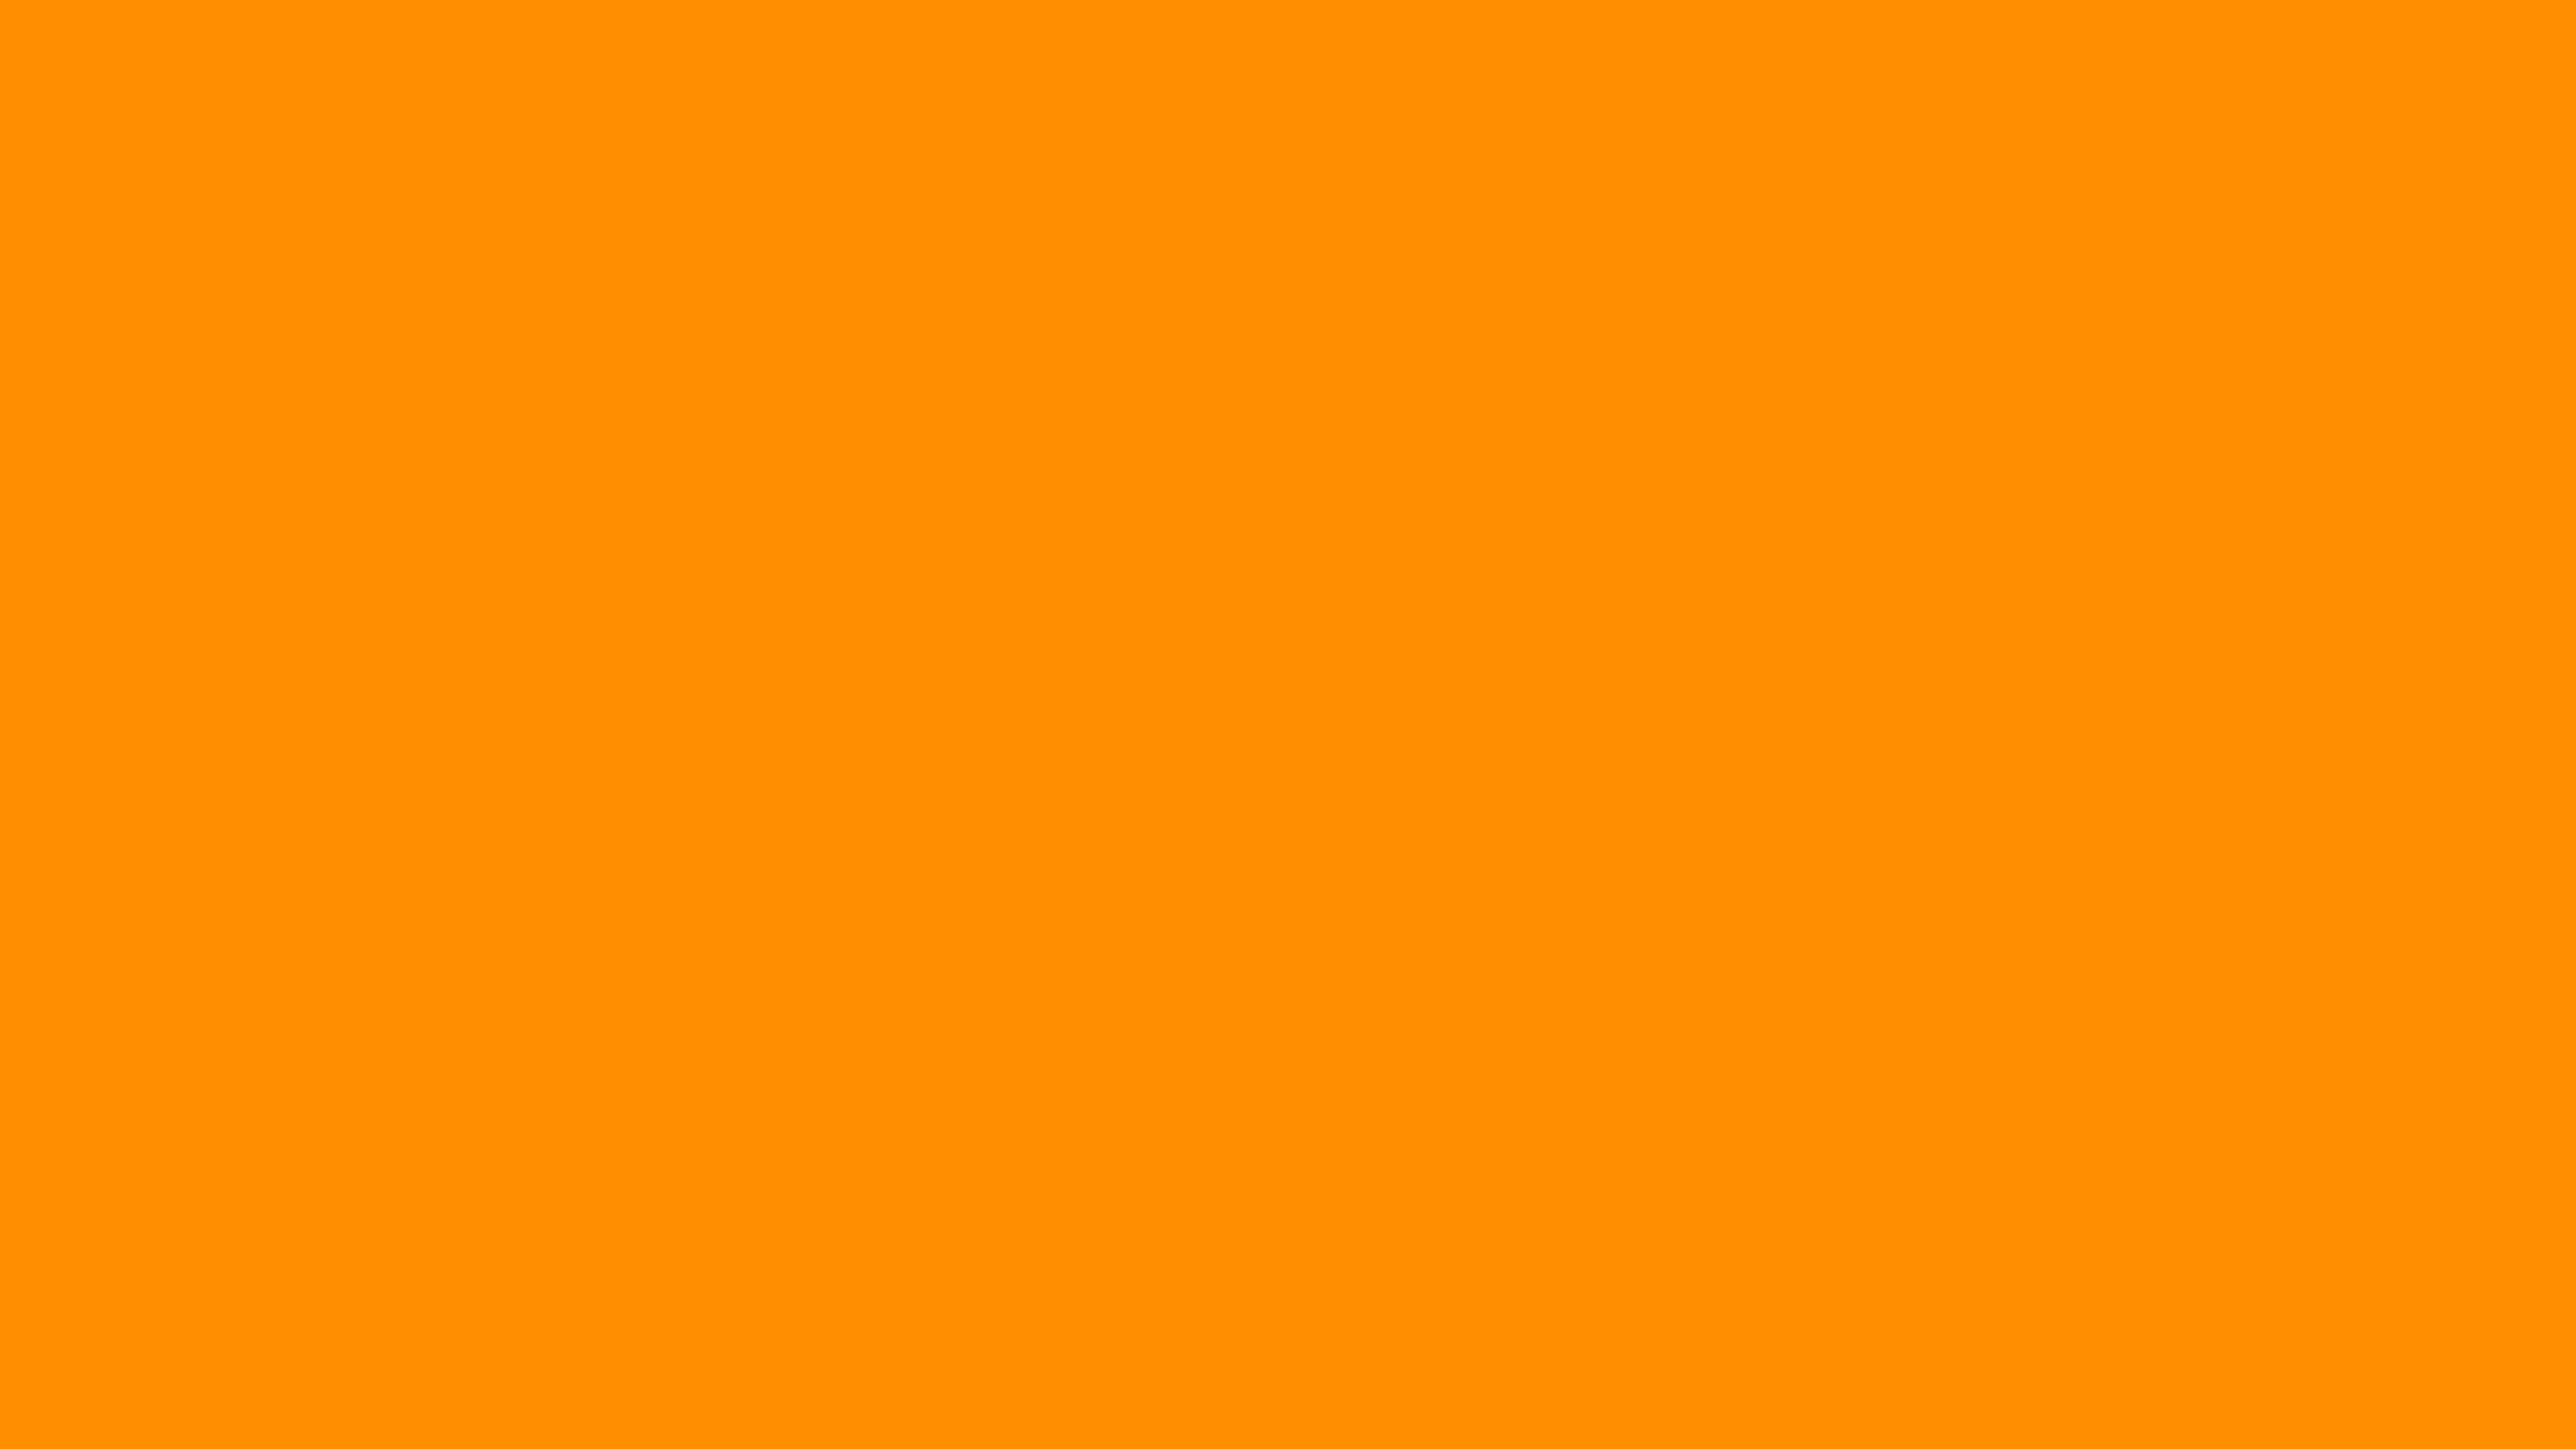 Orange Colour Background Images - Wallpaper Cave